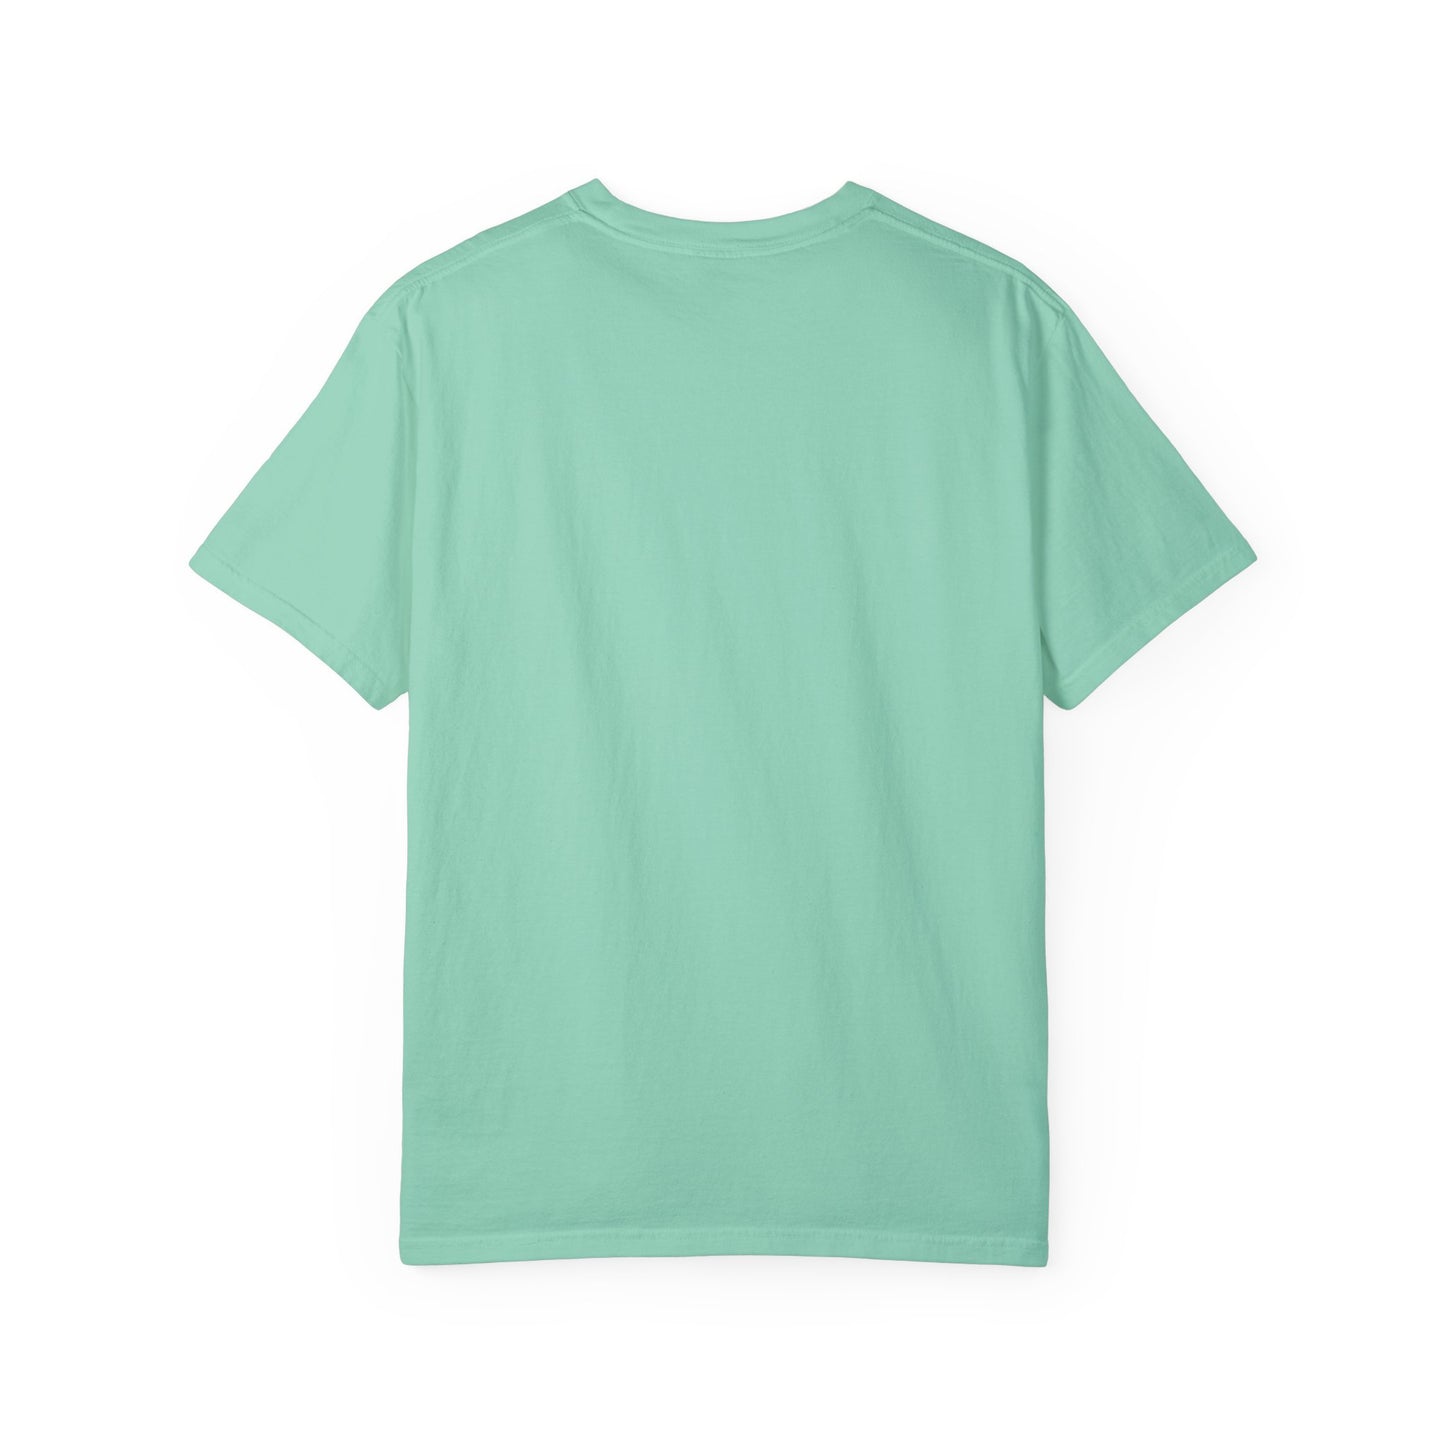 Wild Child Leather Co Desert Comfort Colors T-shirt